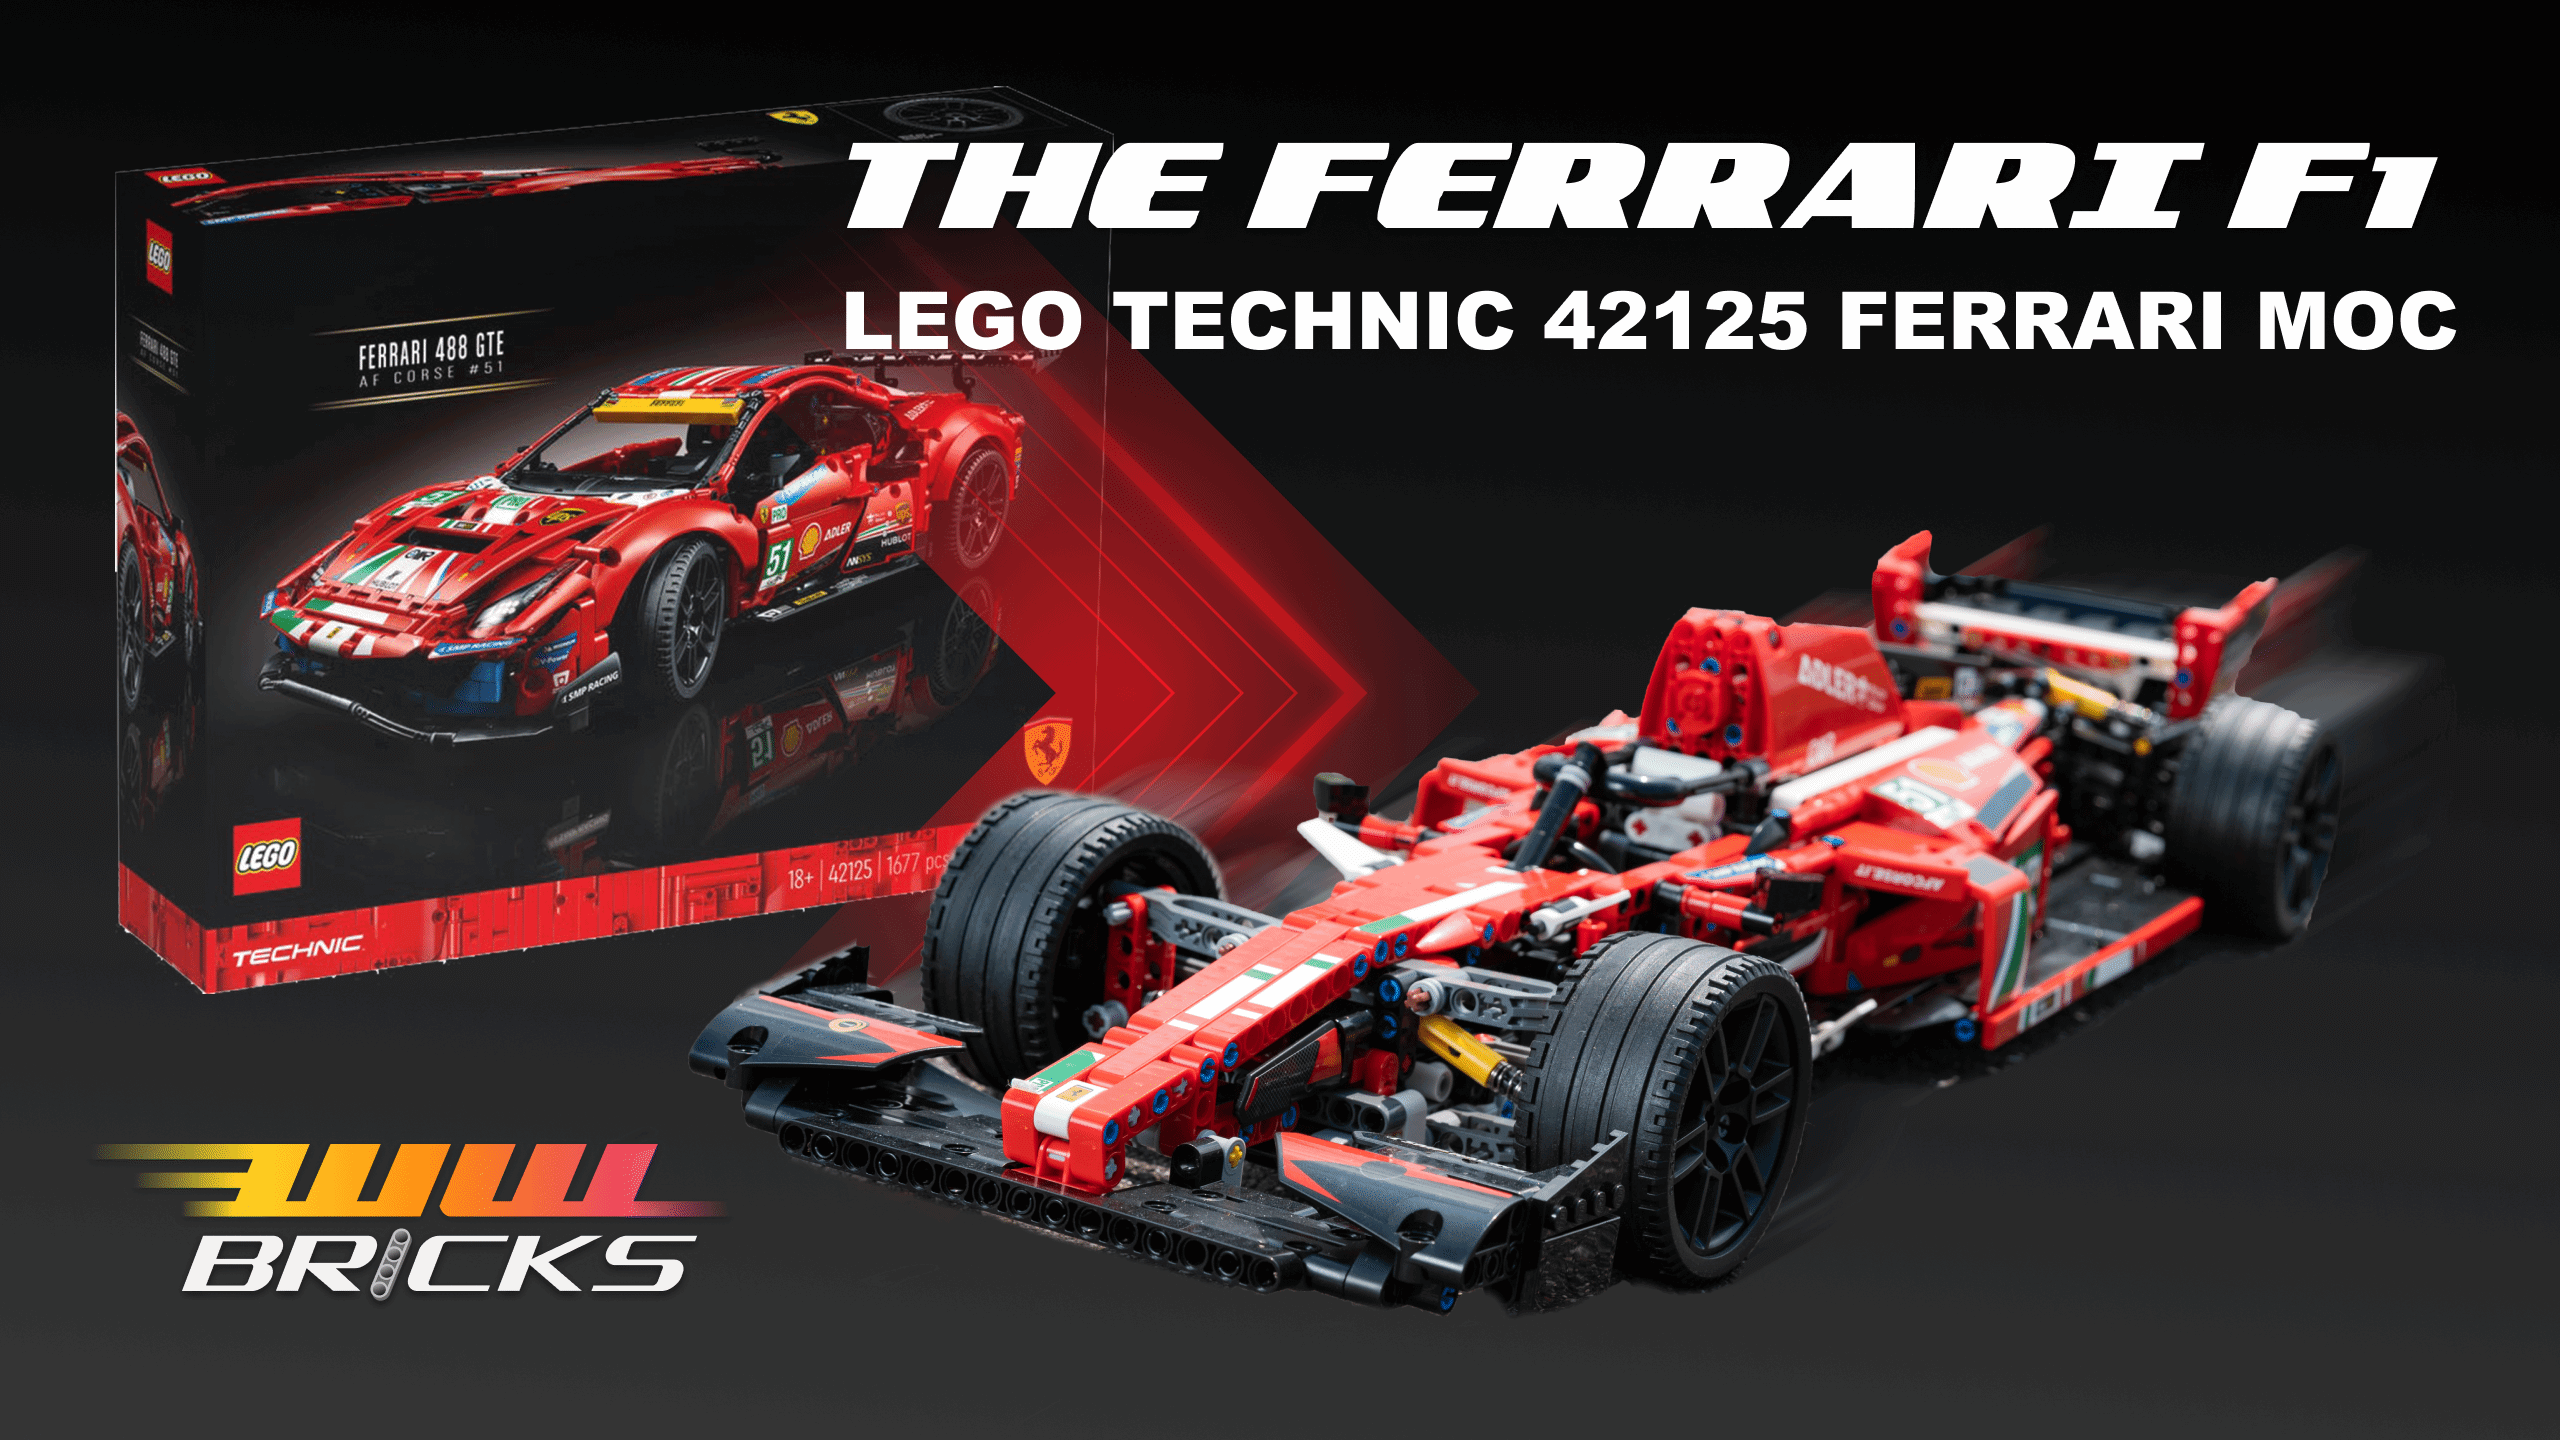 2021 F1 - LEGO Technic 42096 Porsche 911 RSR Alternative build